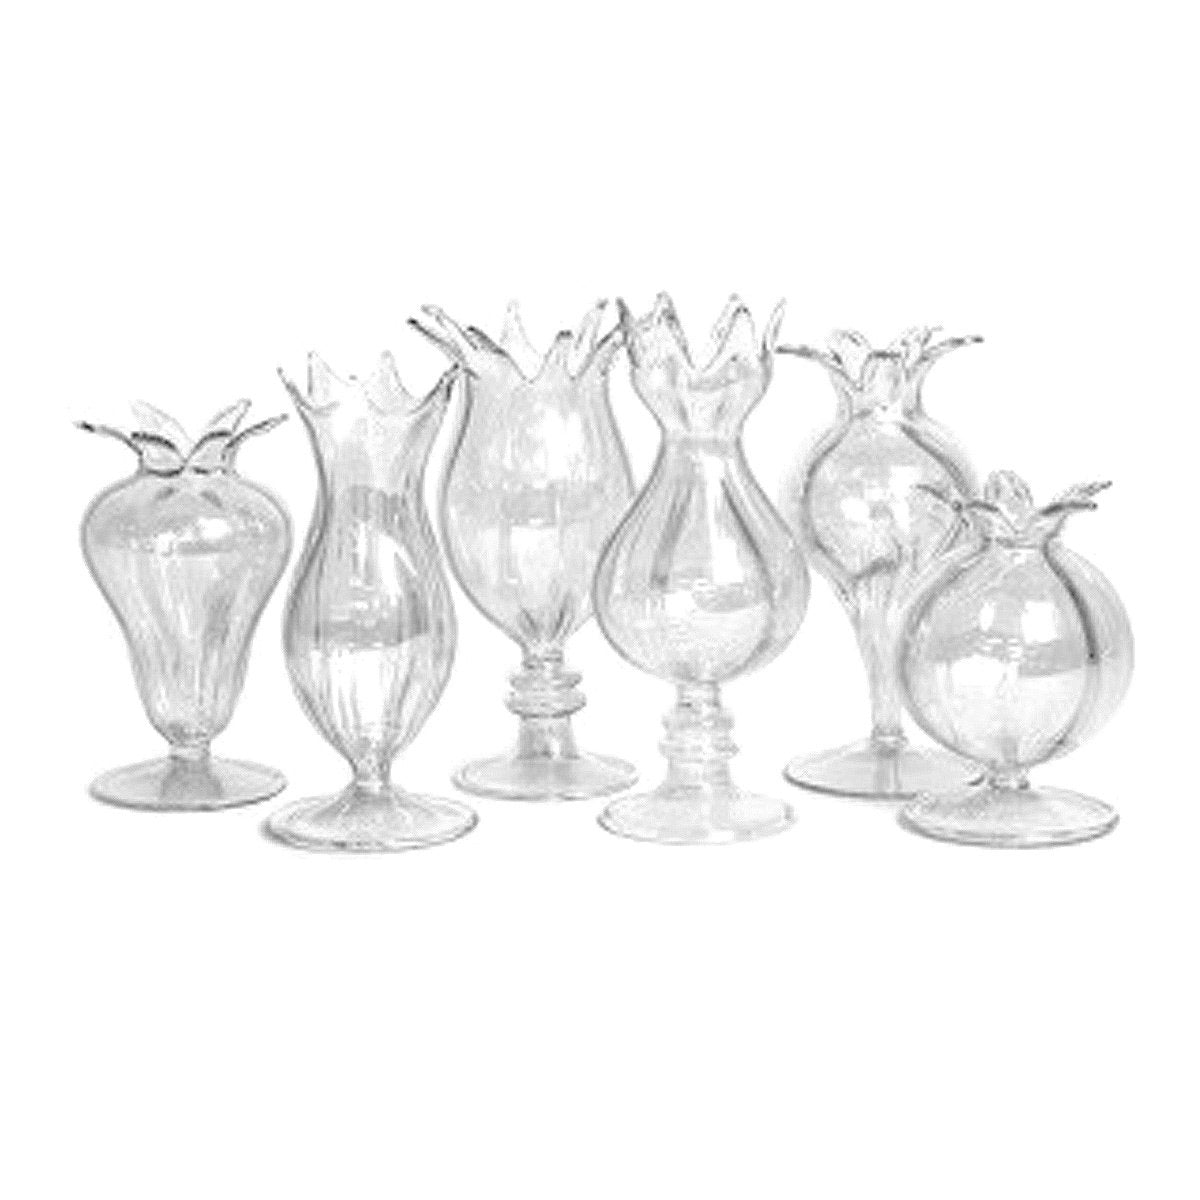 Small Vase (Capsule) set of 4